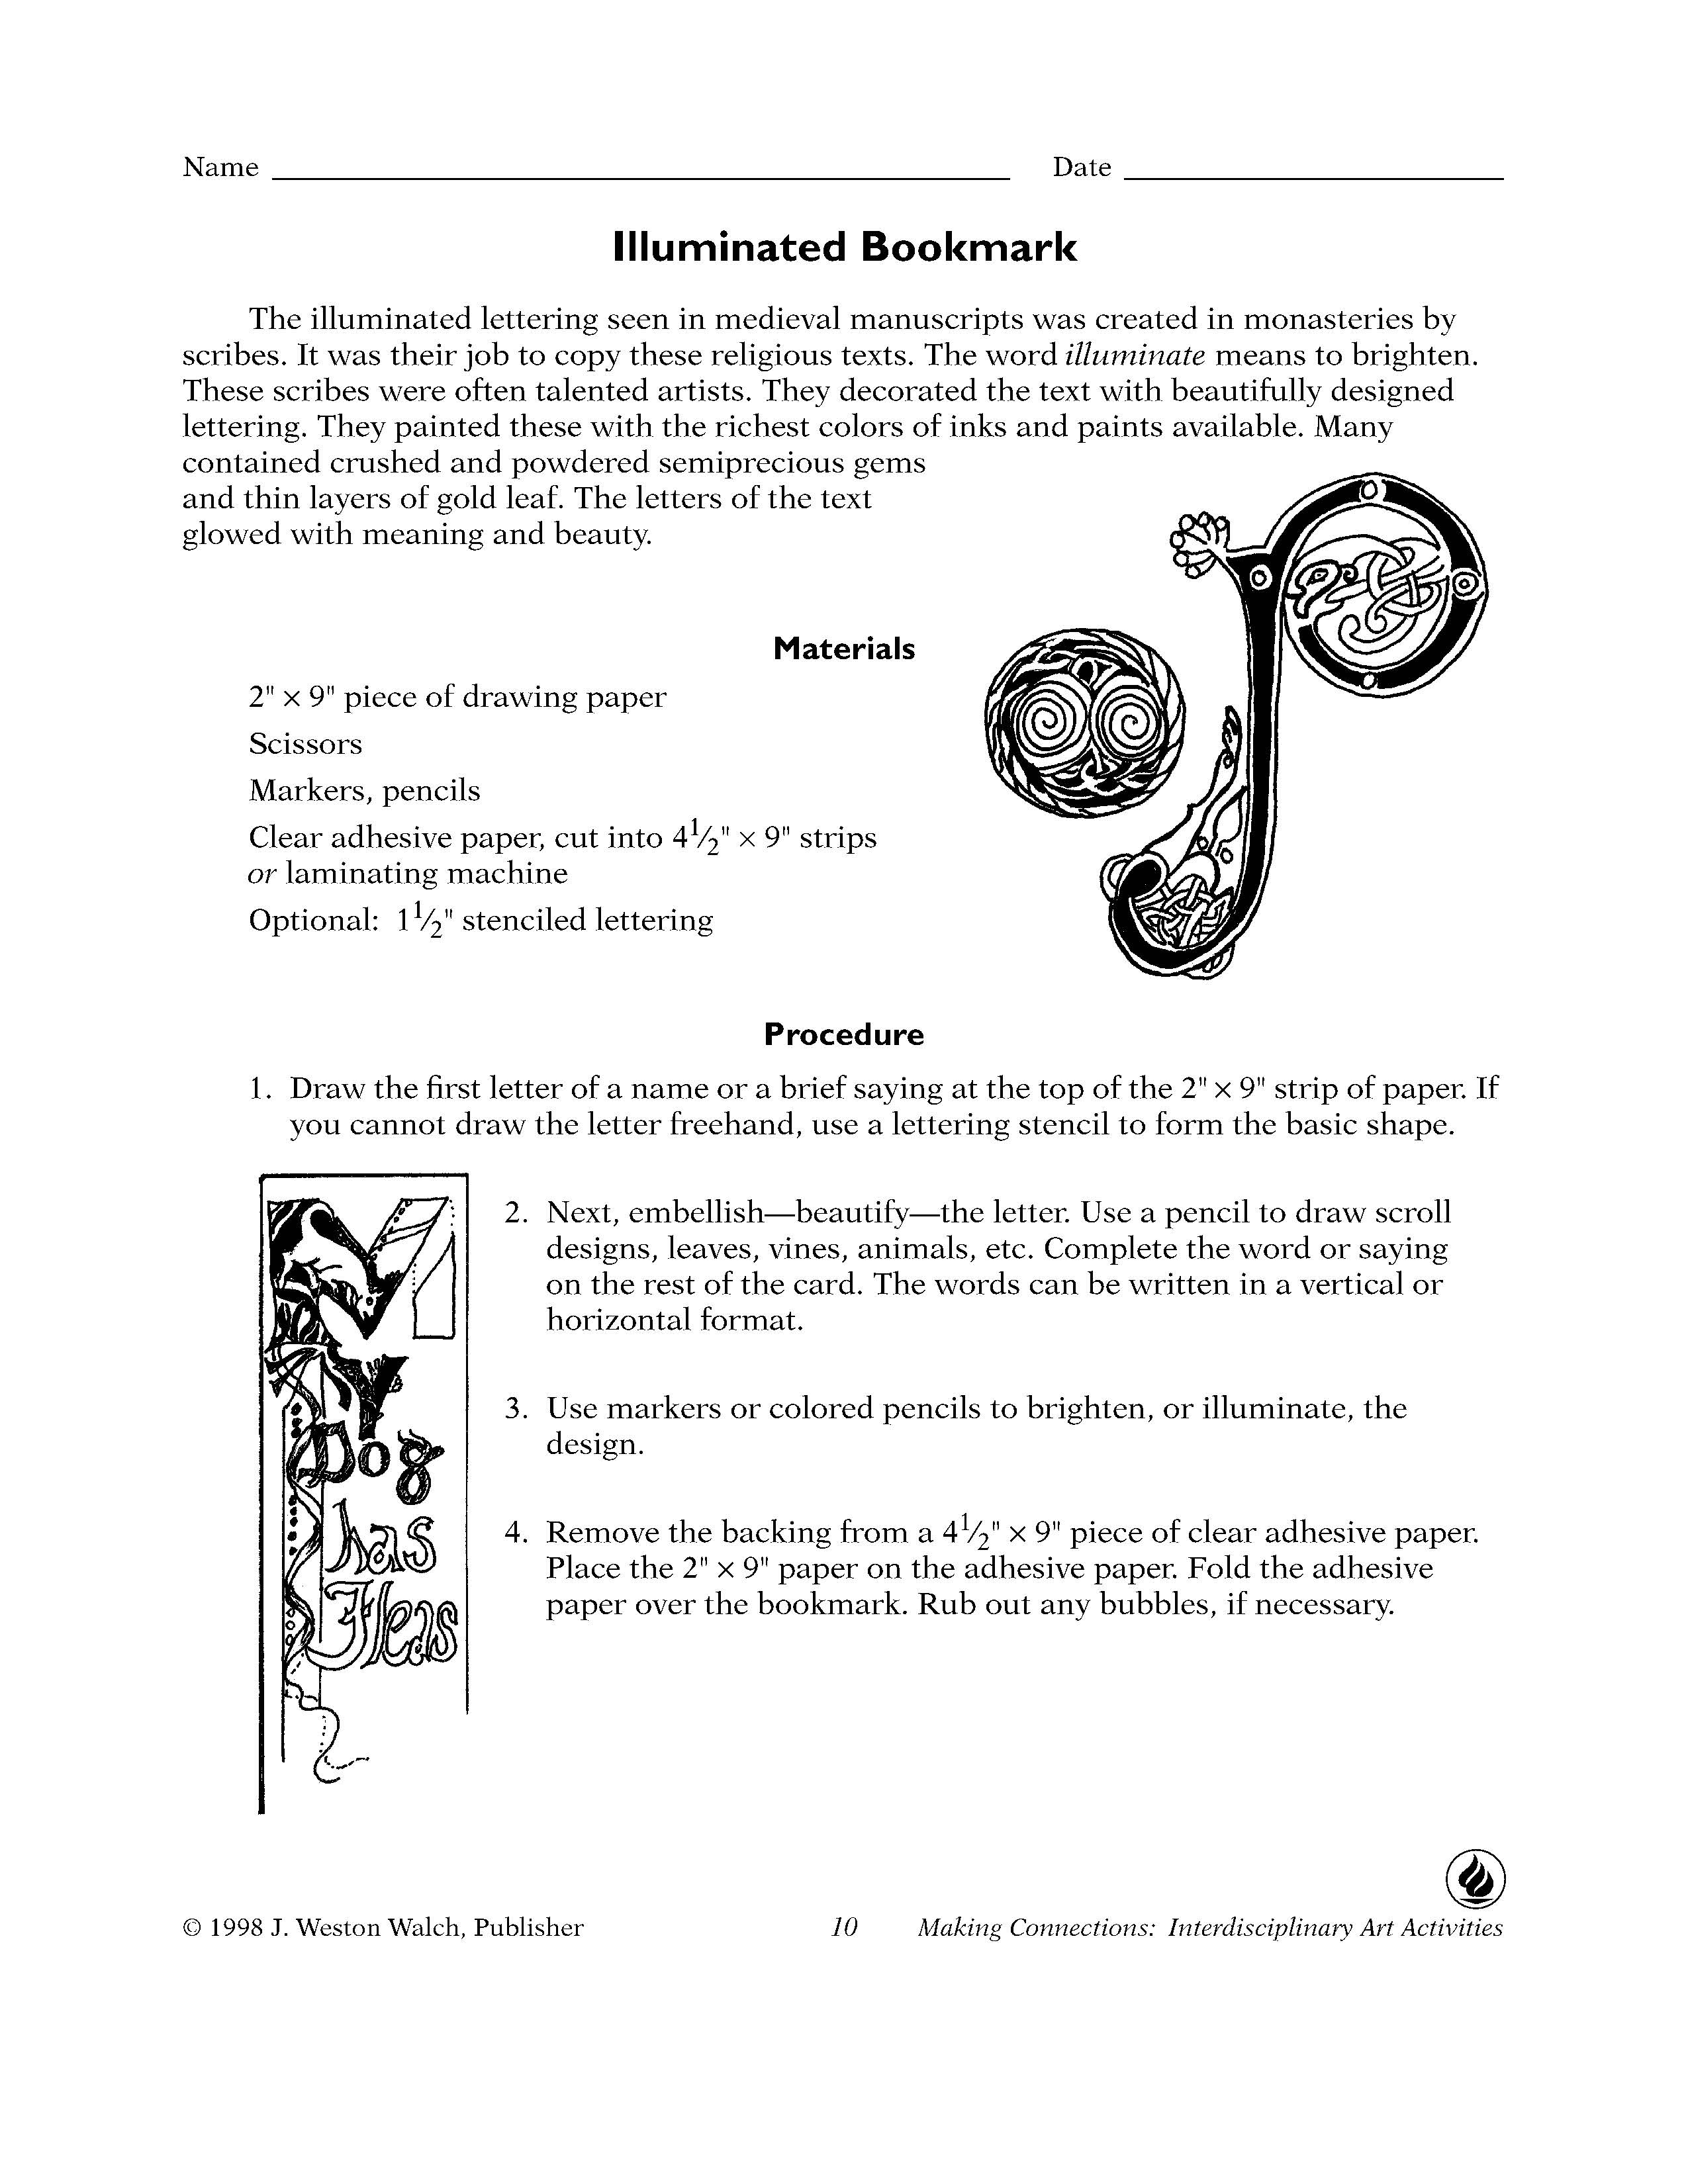 Making　–　Textbooks　Interdisciplinary　Resources　Art　Connections:　Resources　Classroom　Art　Art　Education　Books　Visual　Art　Bright　Art　Activities　Visual　Resources　Art　Book　Visual　Visual　Visual　Australia　Teaching　Education